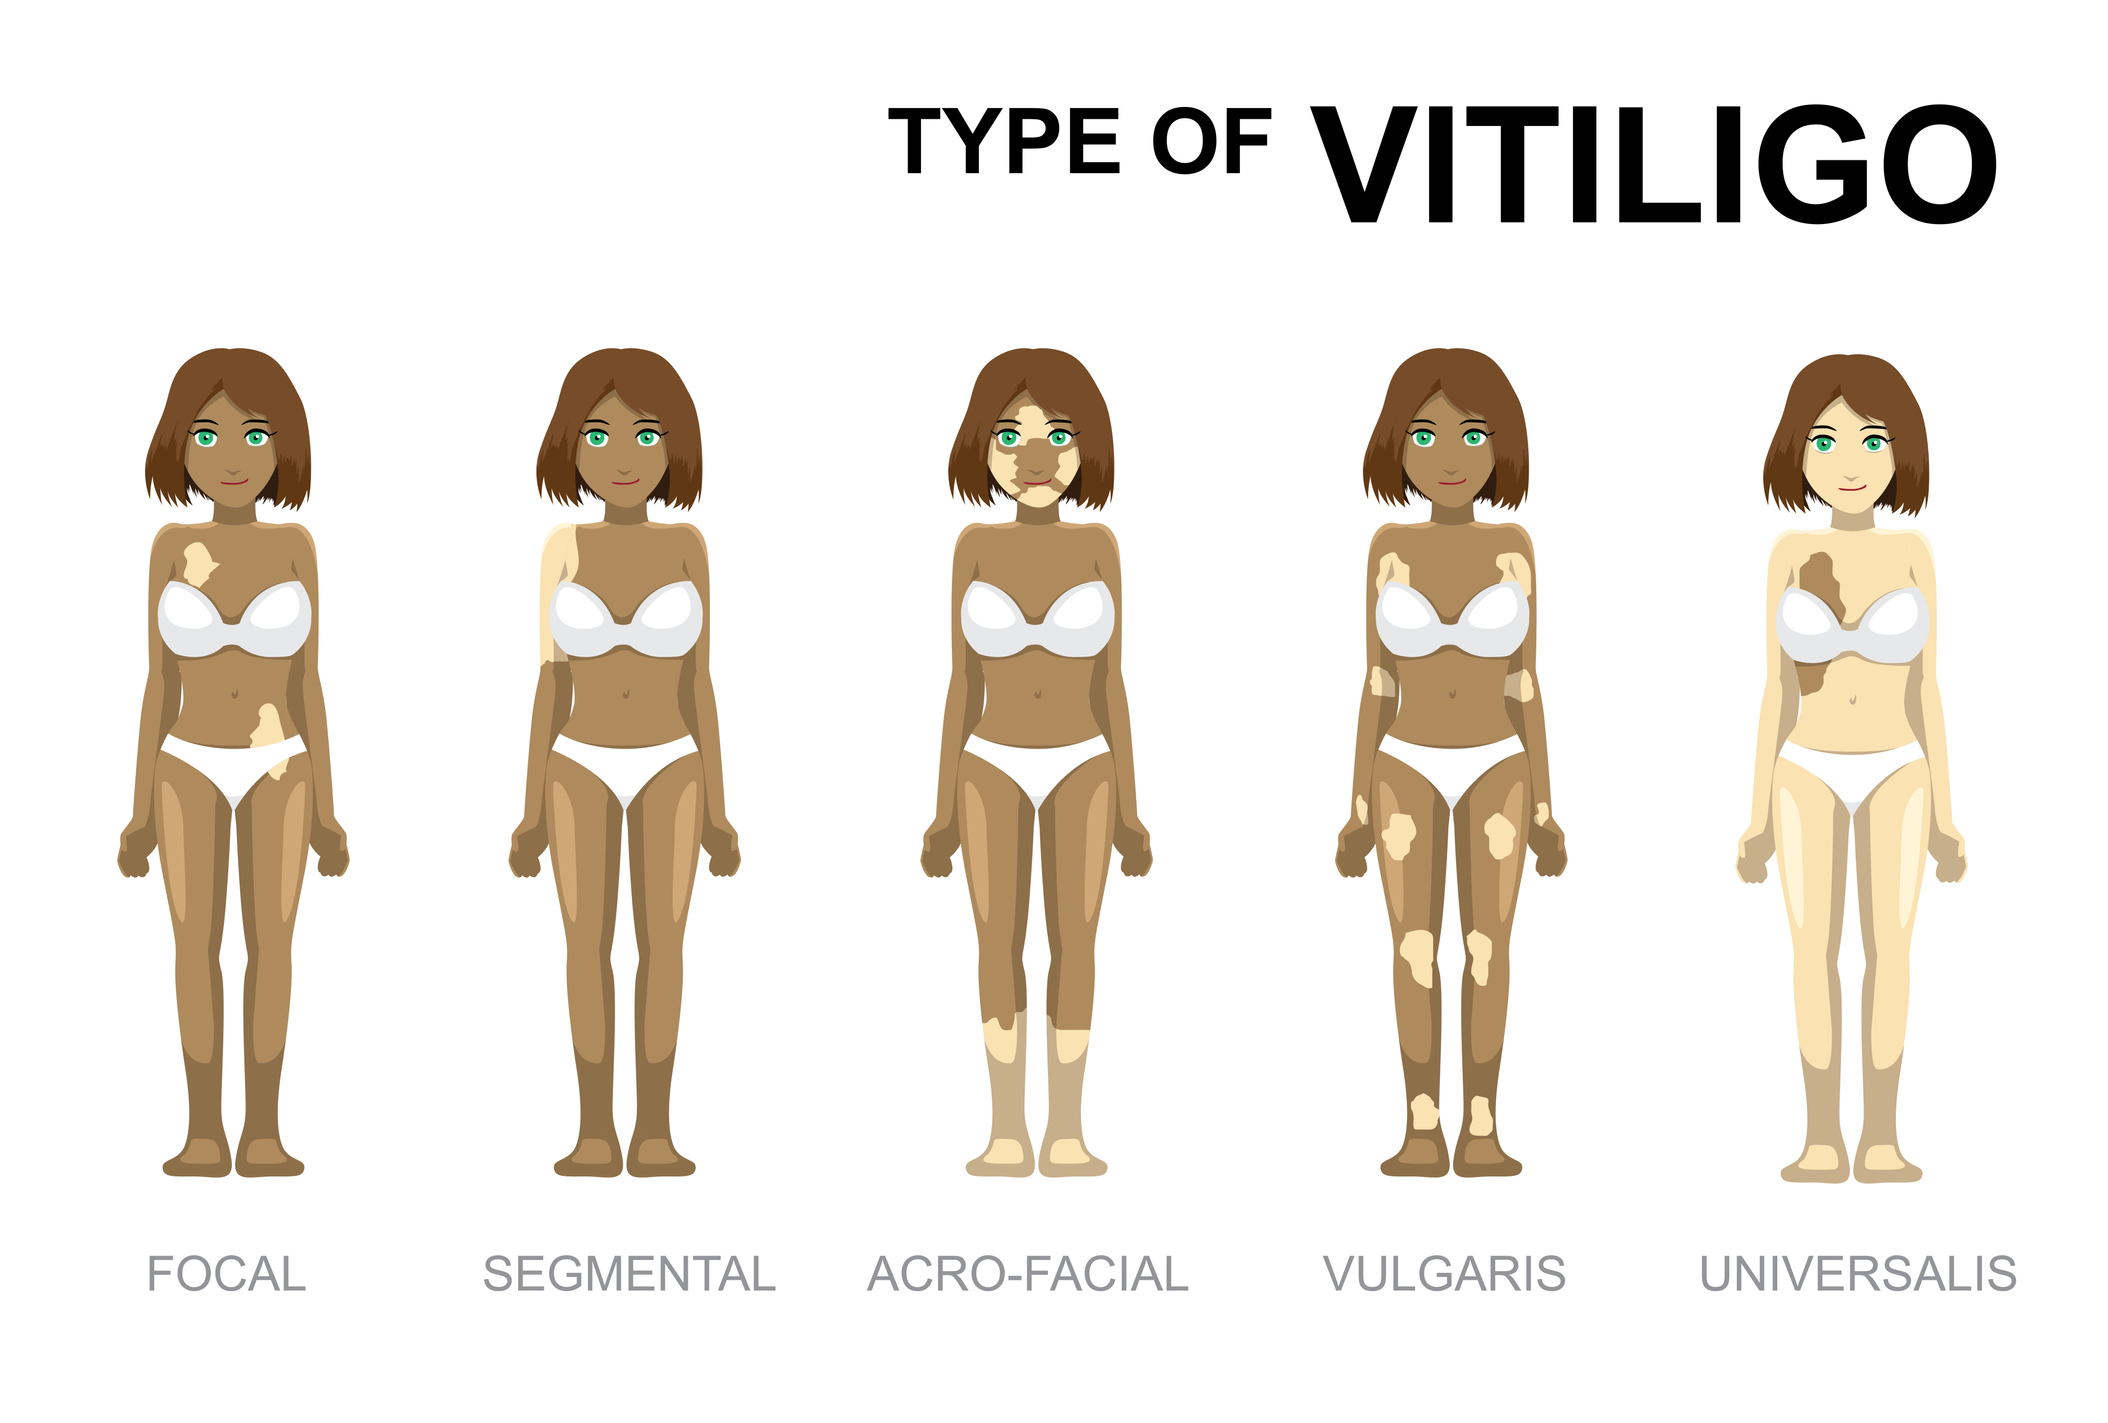 Arten von Vitiligo